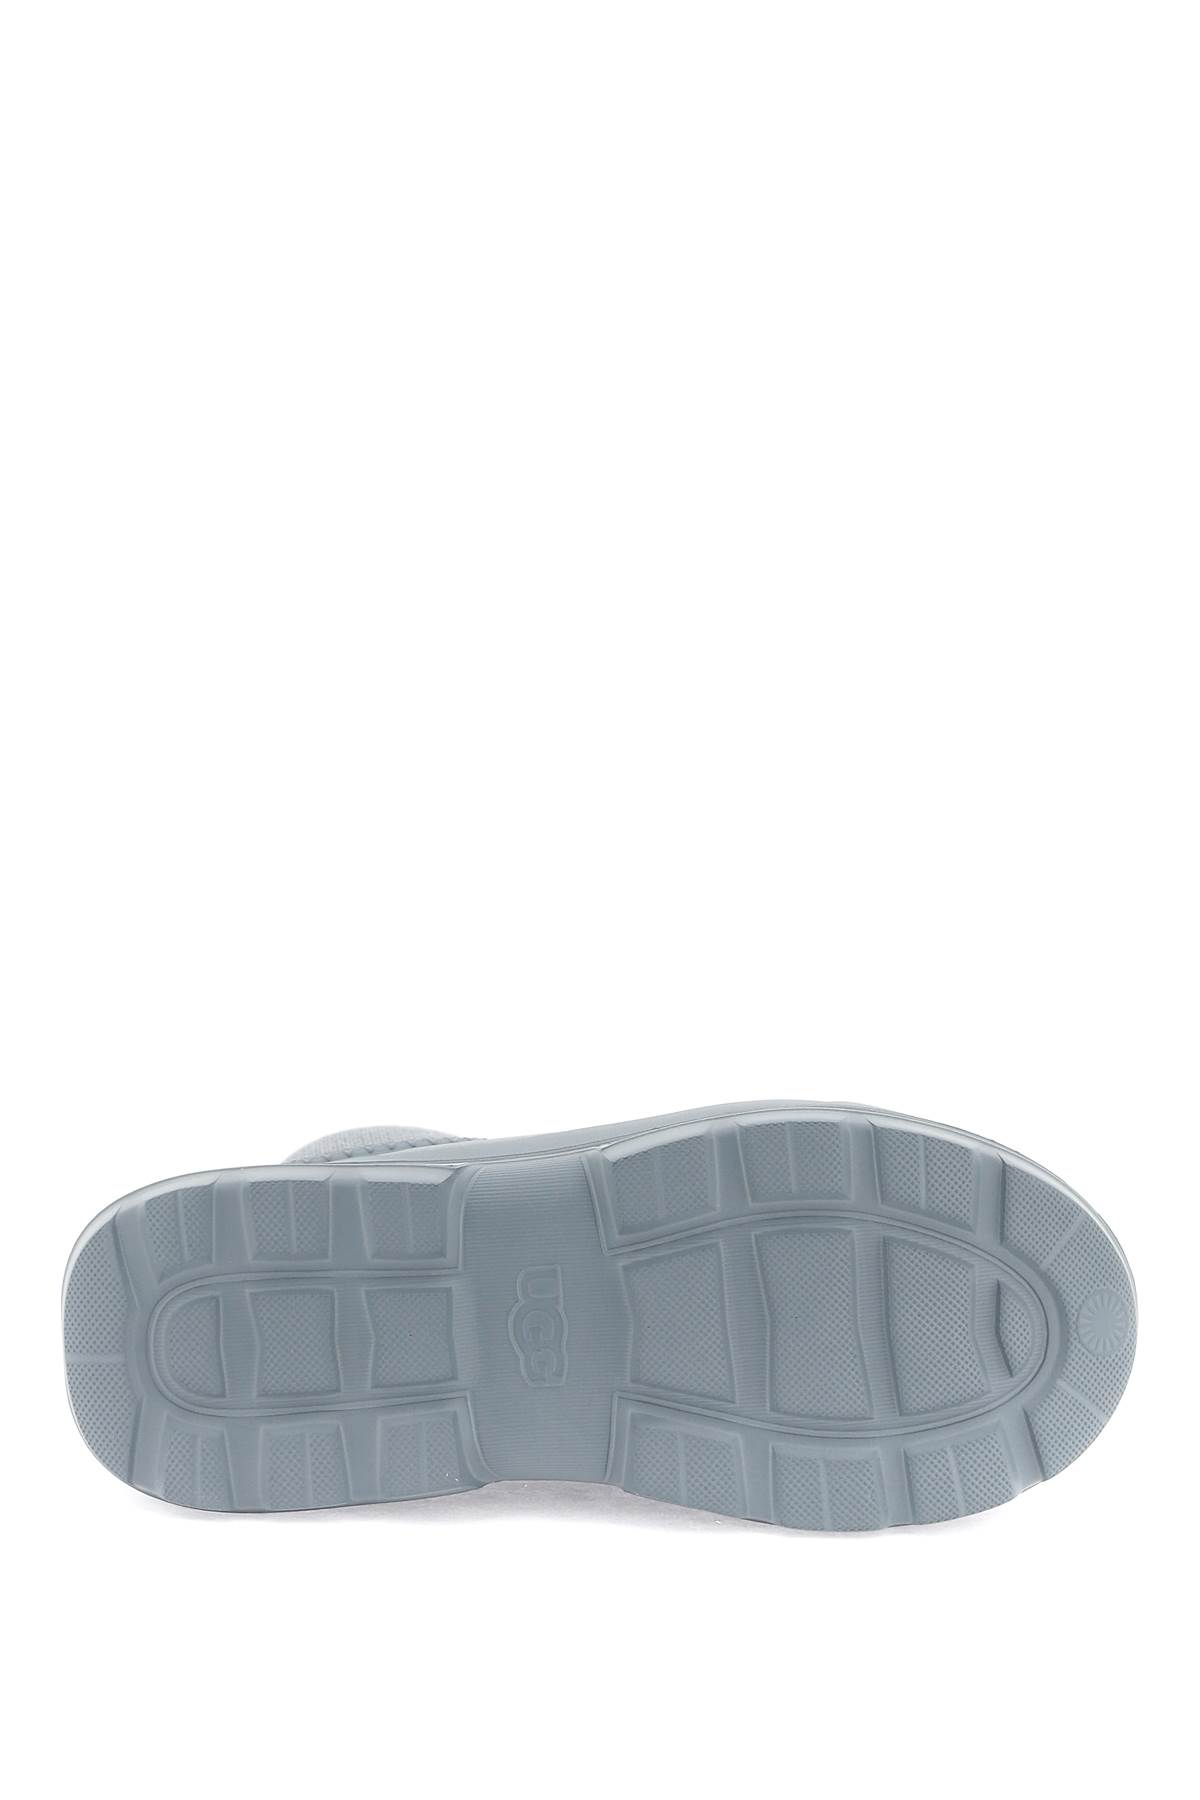 Shop Ugg Tasman X Slip-on Shoes In Geyser (grey)